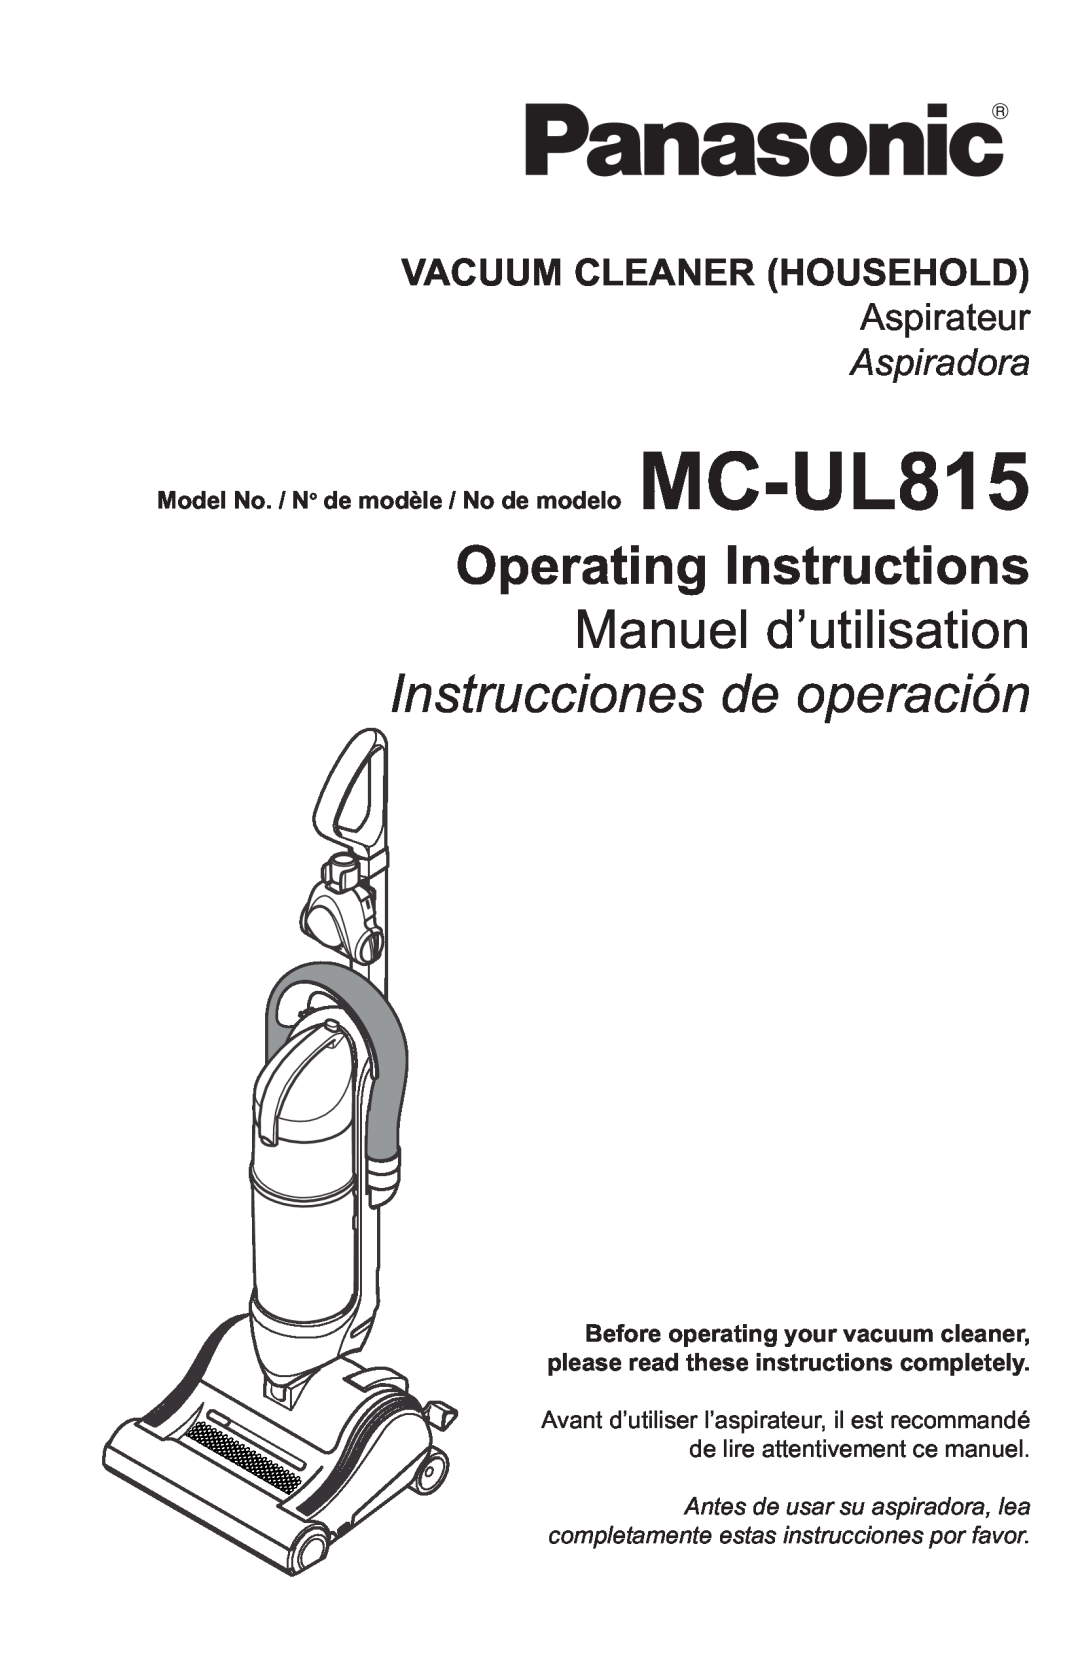 Panasonic MCUL815 operating instructions Operating Instructions, Manuel d’utilisation, Vacuum Cleaner Household 